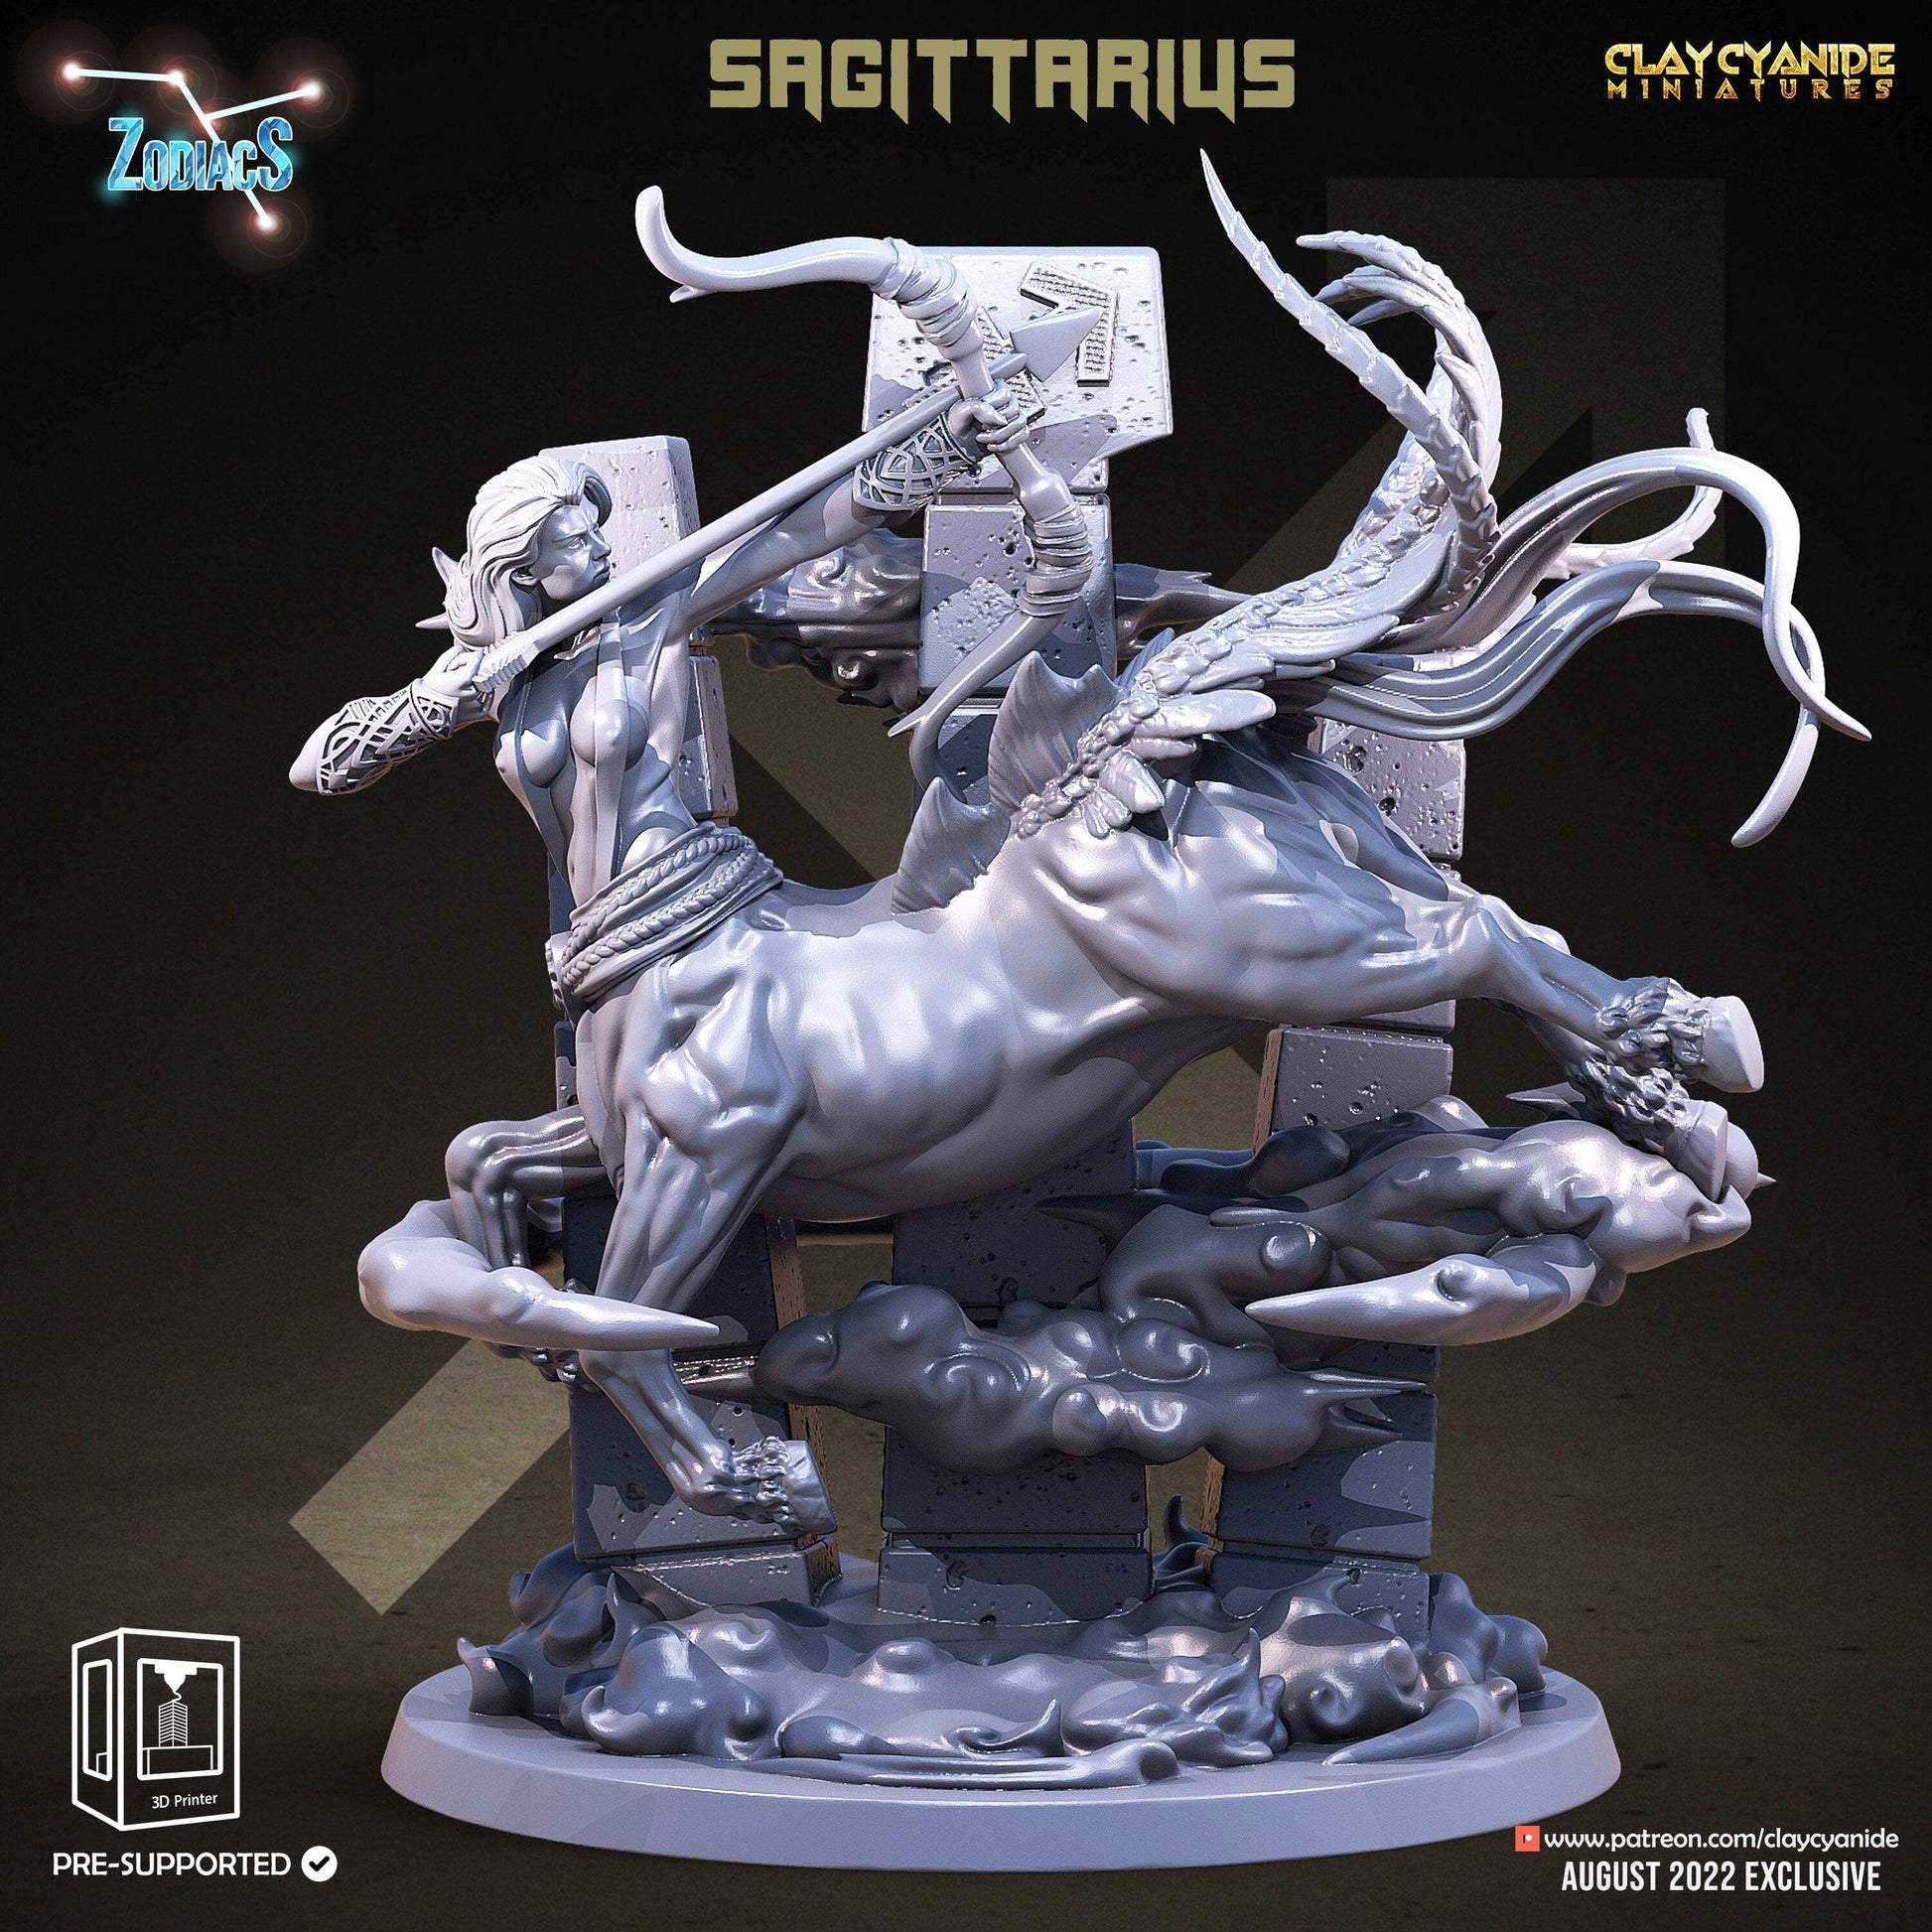 Sagittarius Miniature | Clay Cyanide | Zodiac miniature | Tabletop Gaming | DnD Miniature | Dungeons and Dragons | zodiac gifts decor - Plague Miniatures shop for DnD Miniatures